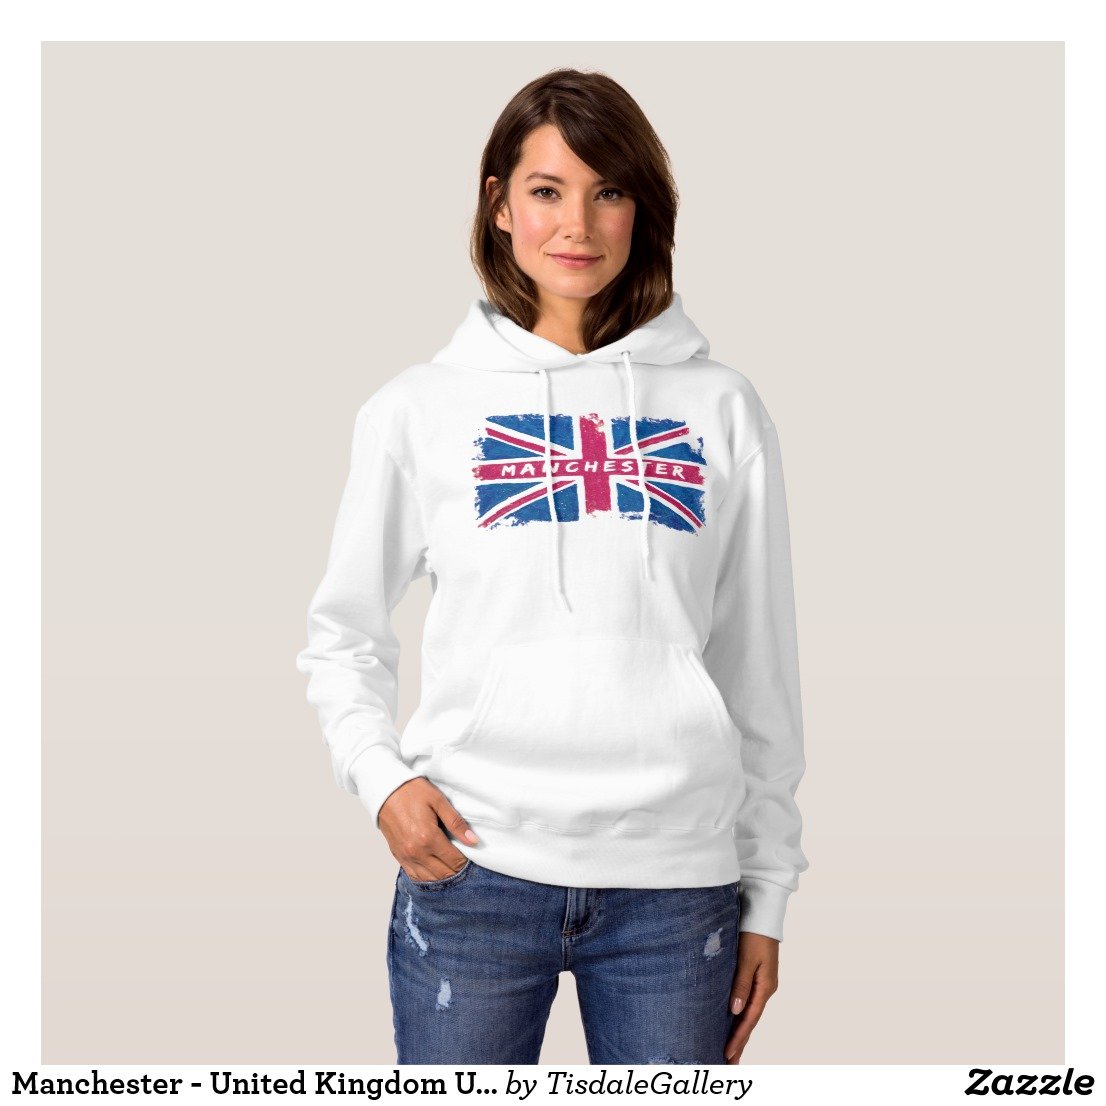 Manchester T-shirt - Union Jack Design on Women's Hoodie